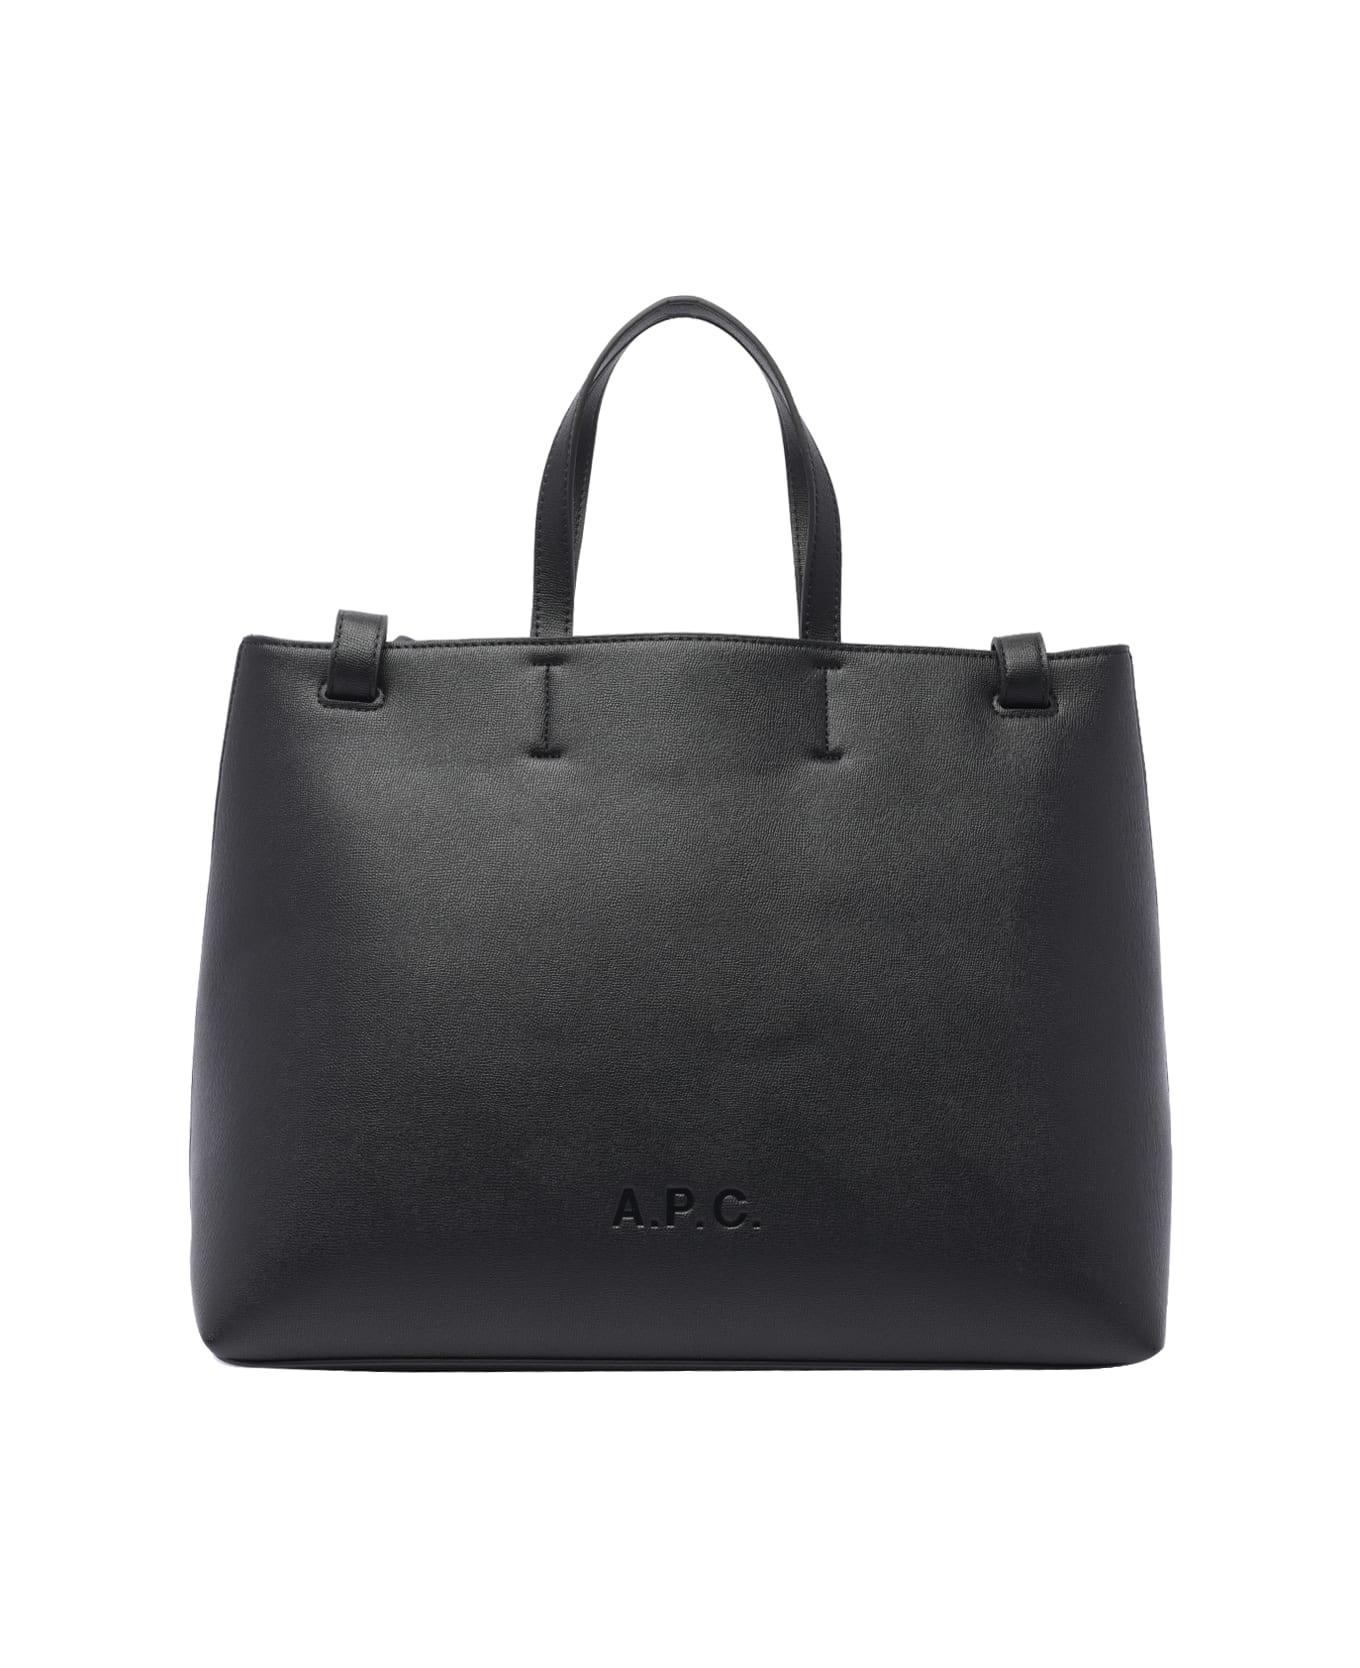 A.P.C. Market Shopping Bag - Black